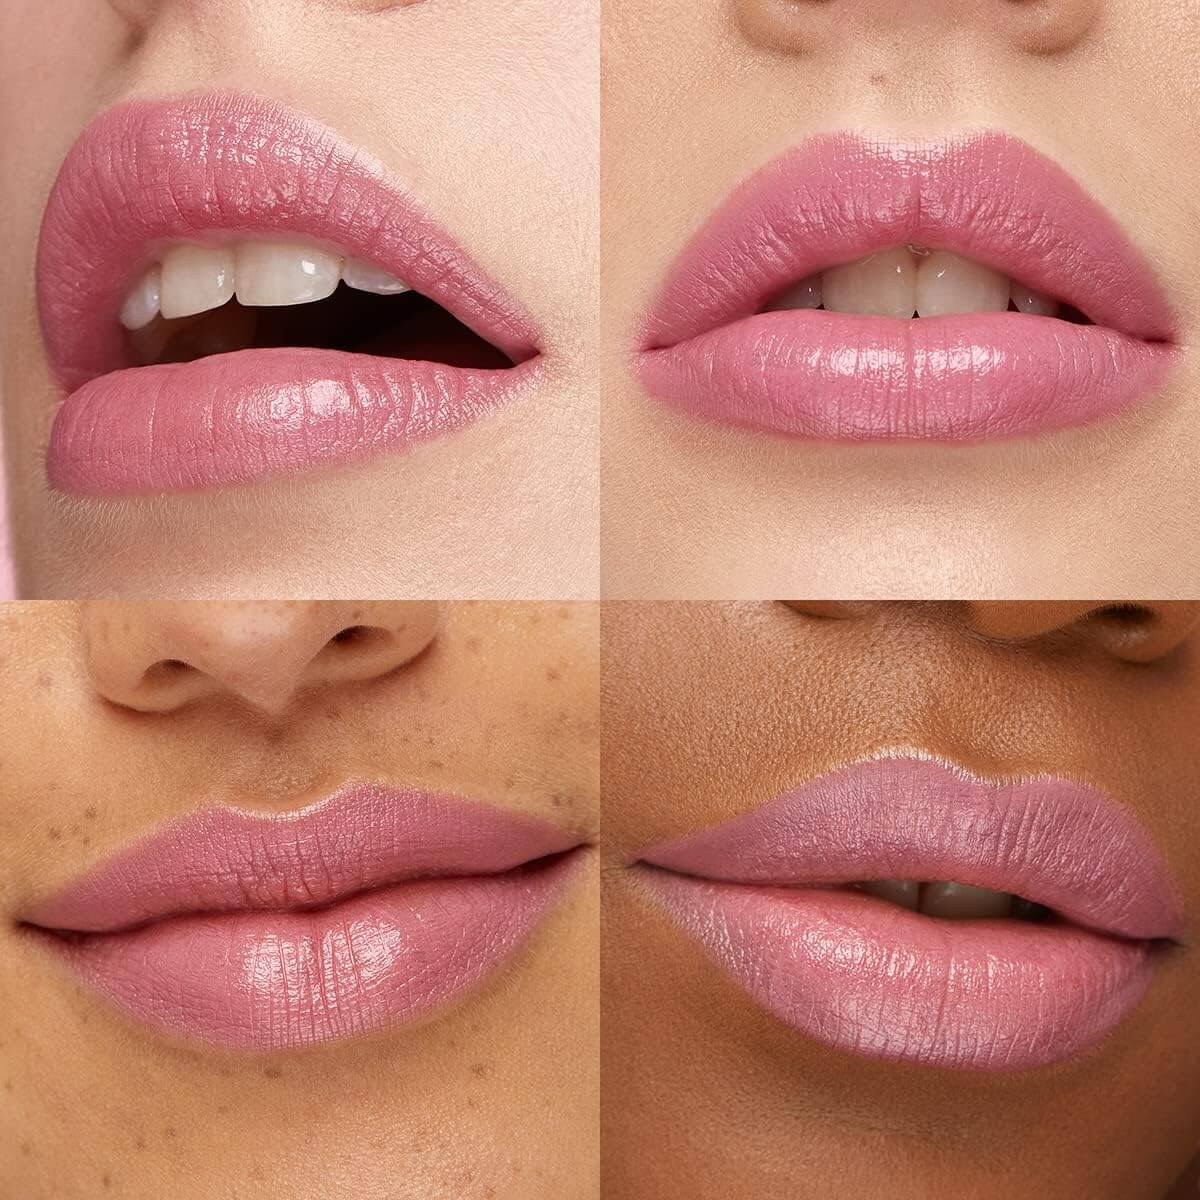 "KIKO Milano lipstick swatches on various skin tones showcasing long-lasting glossy finish."